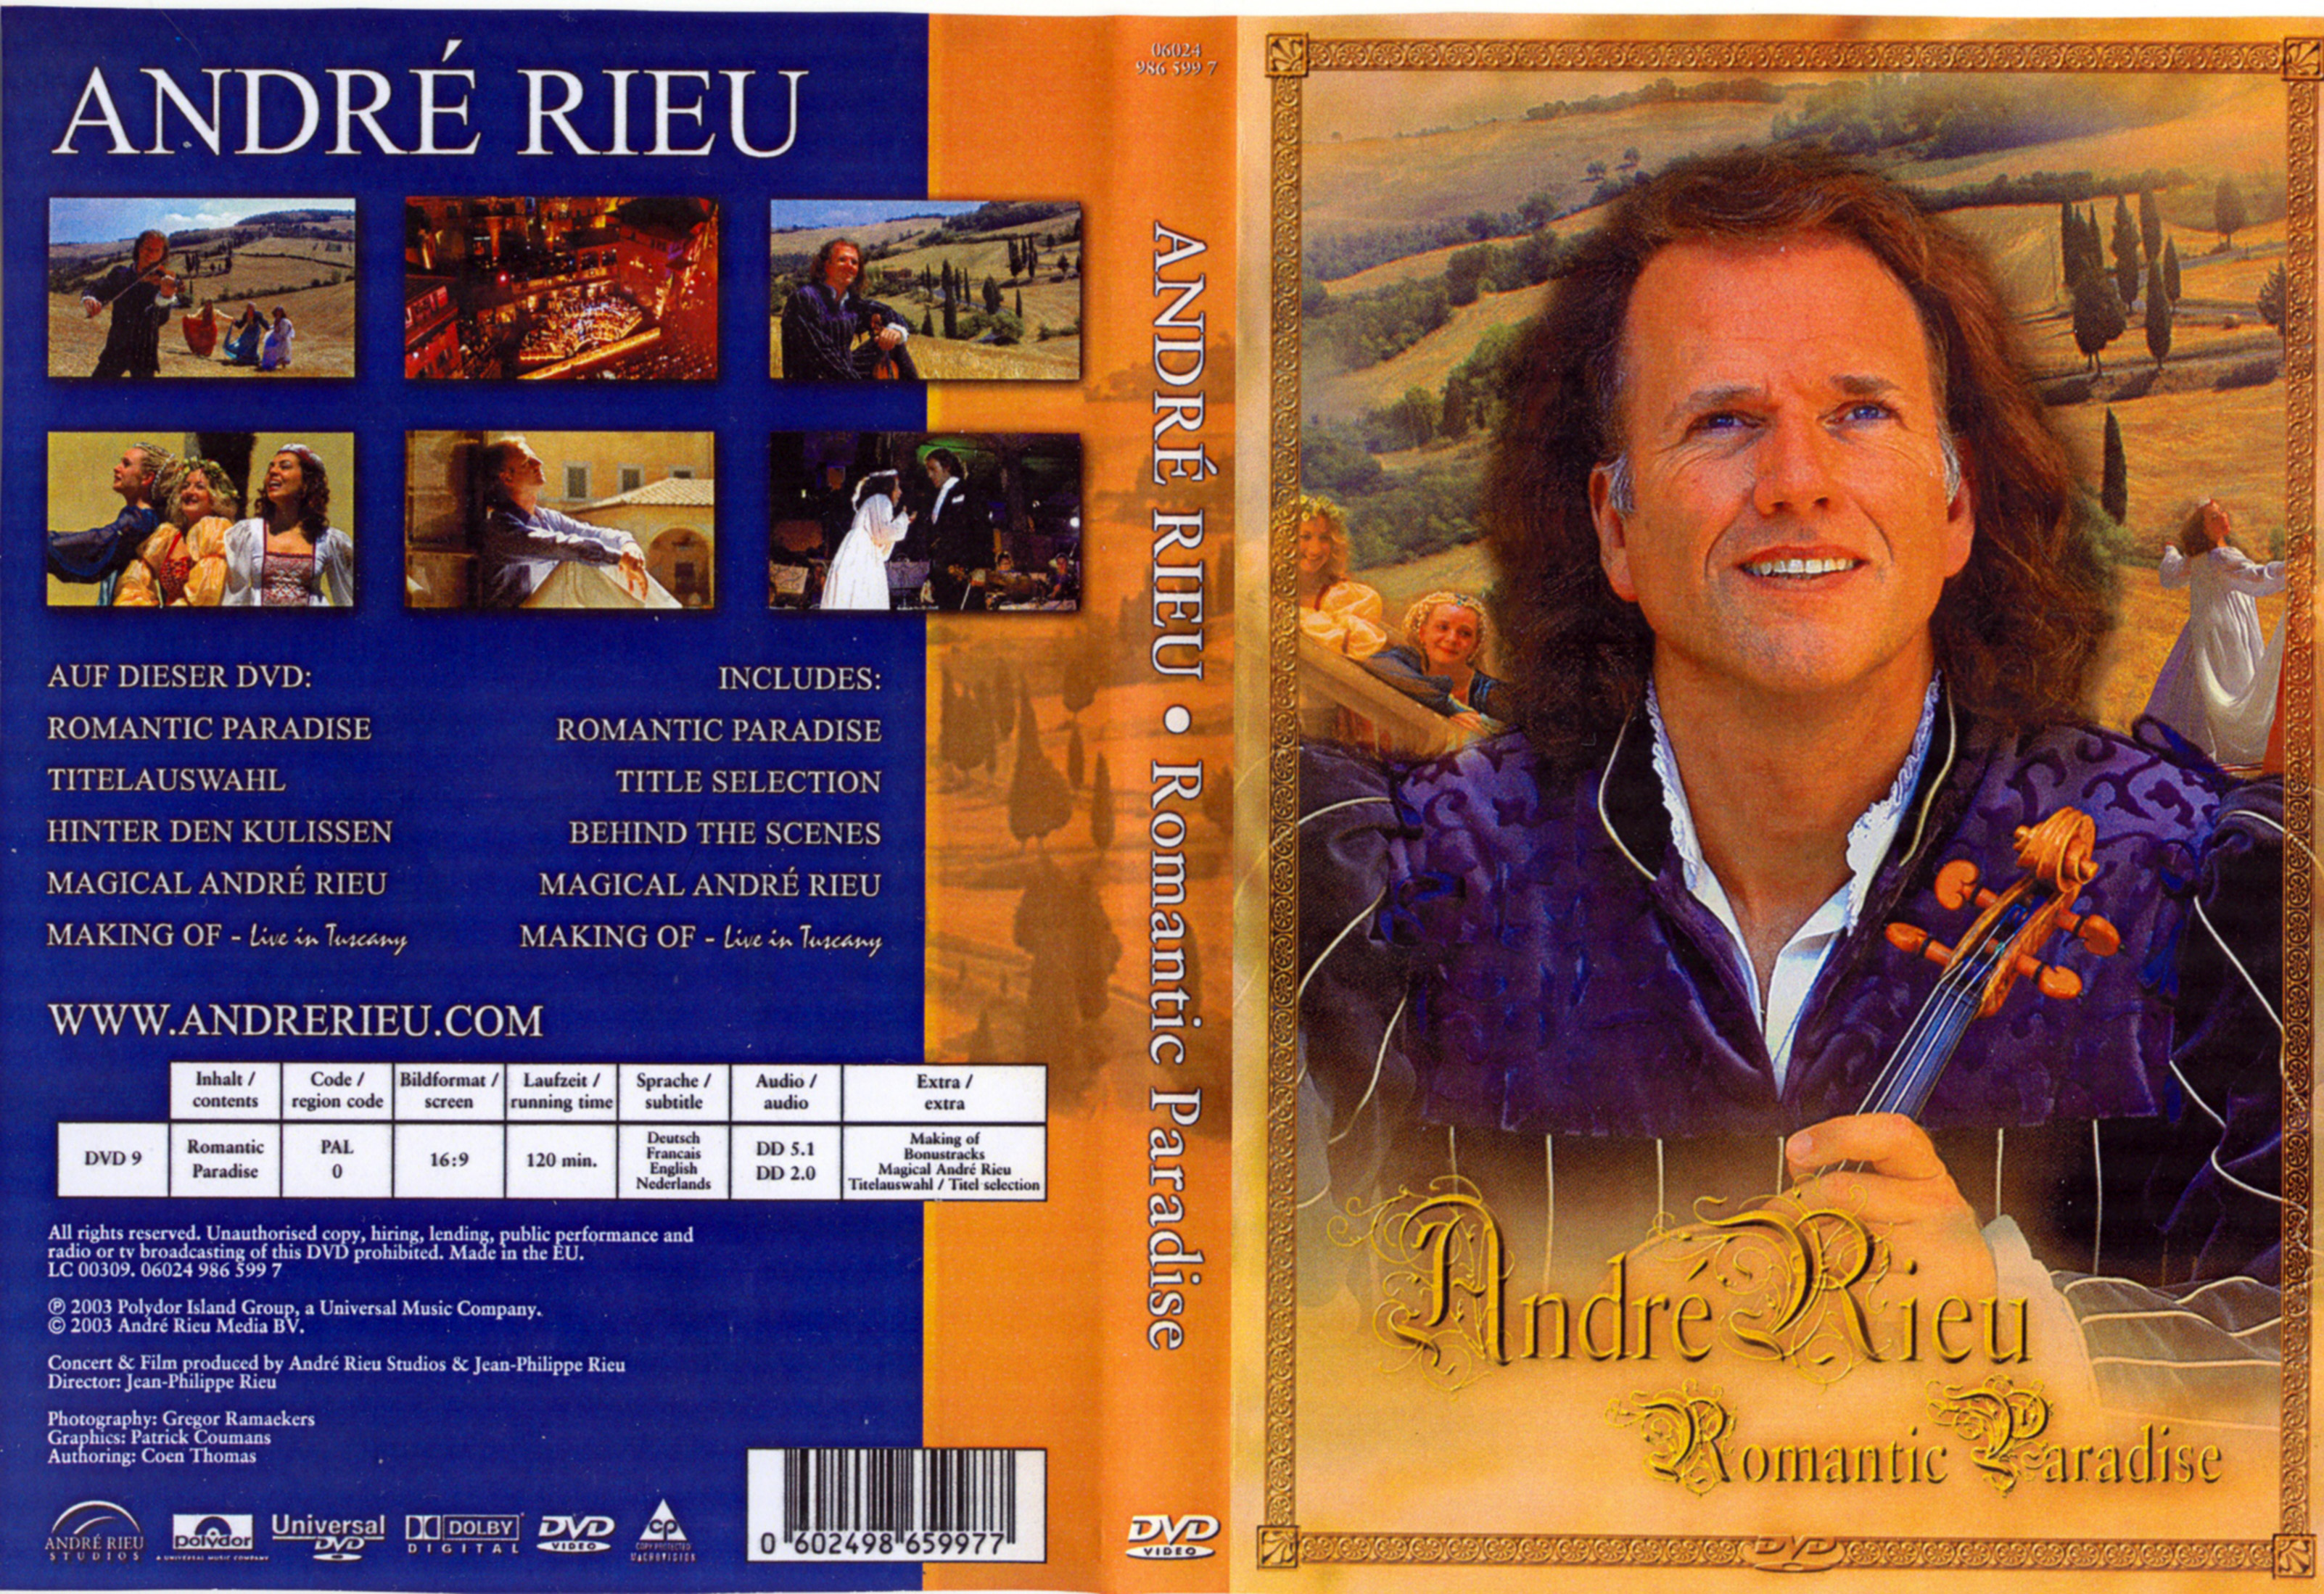 Jaquette DVD Andr Rieu Romantic Paradise